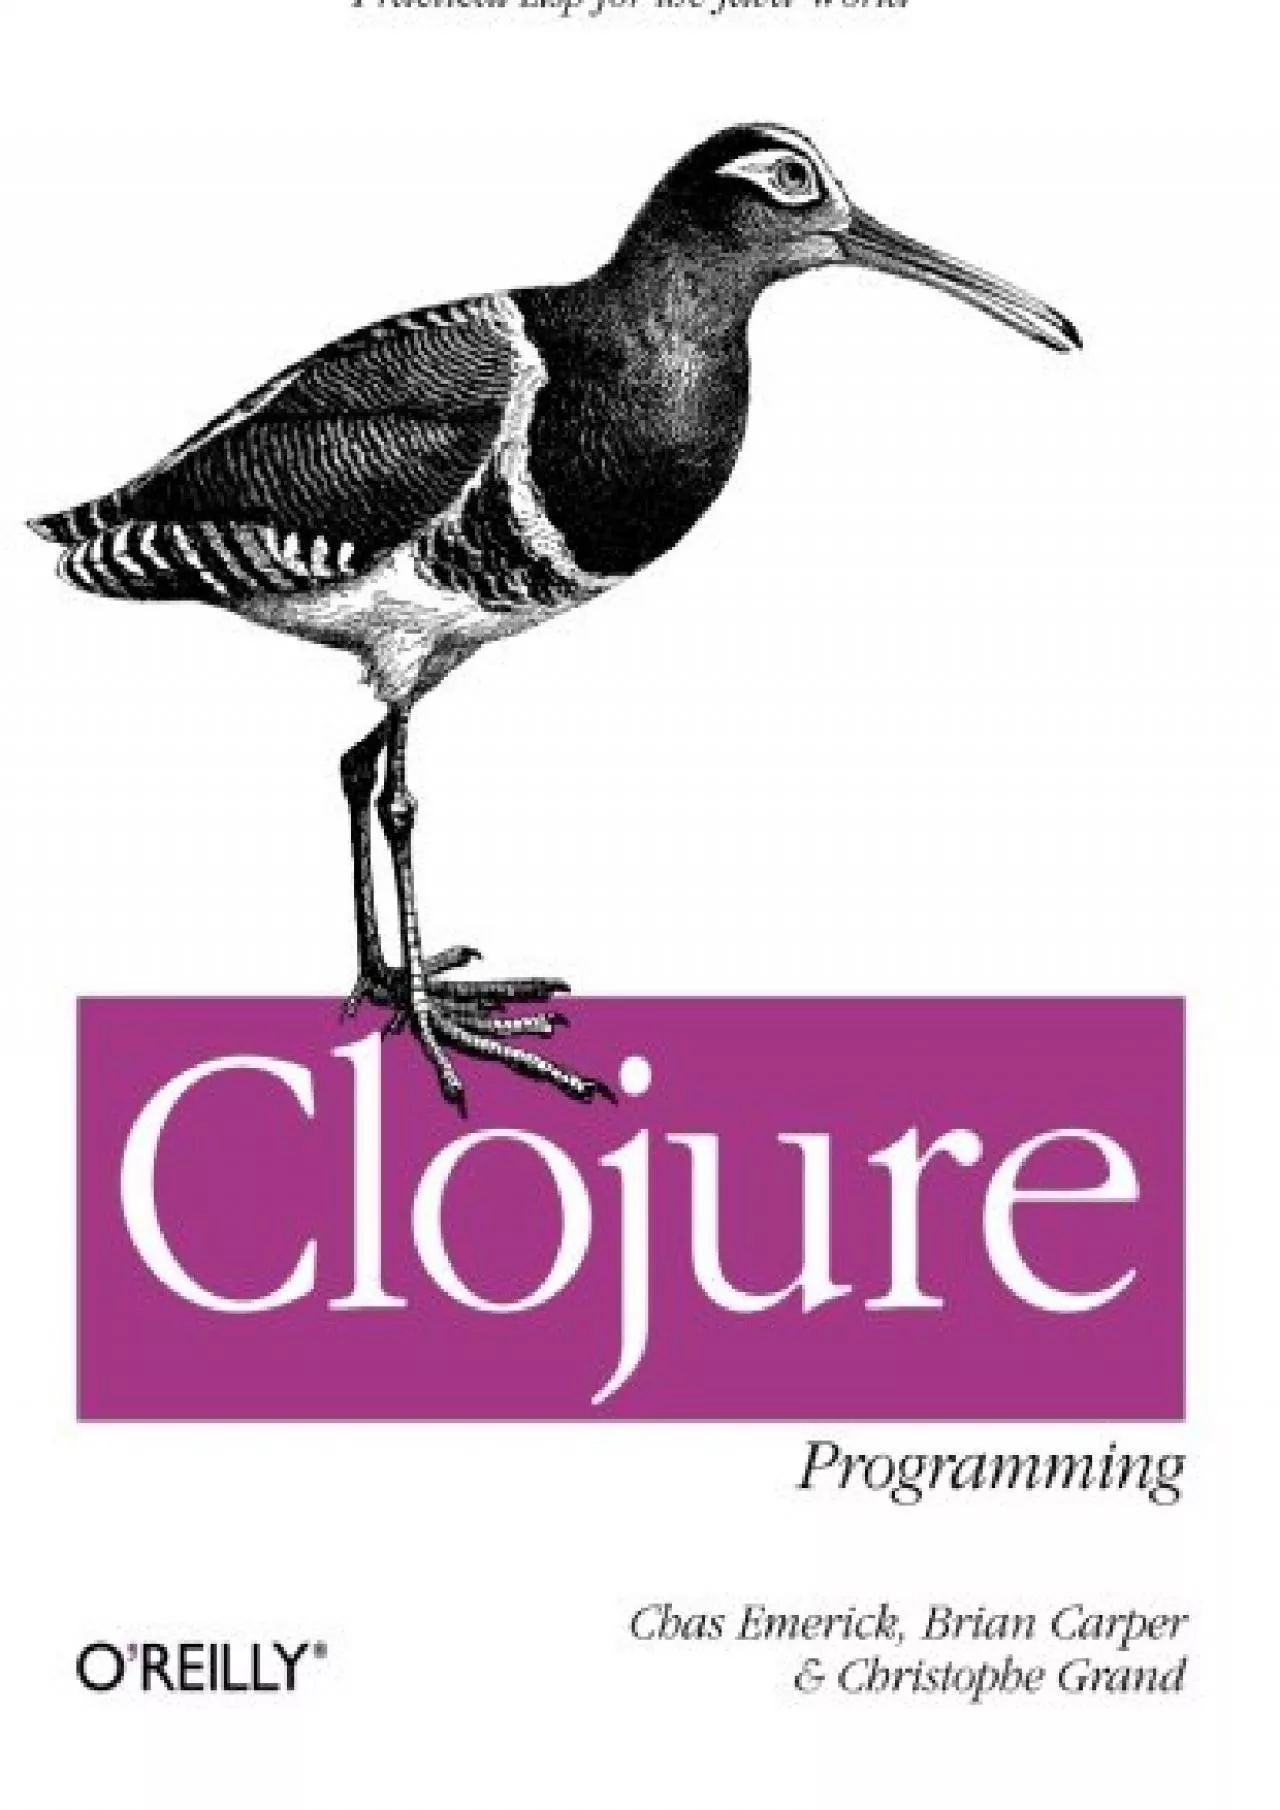 [BEST]-Clojure Programming: Practical Lisp for the Java World